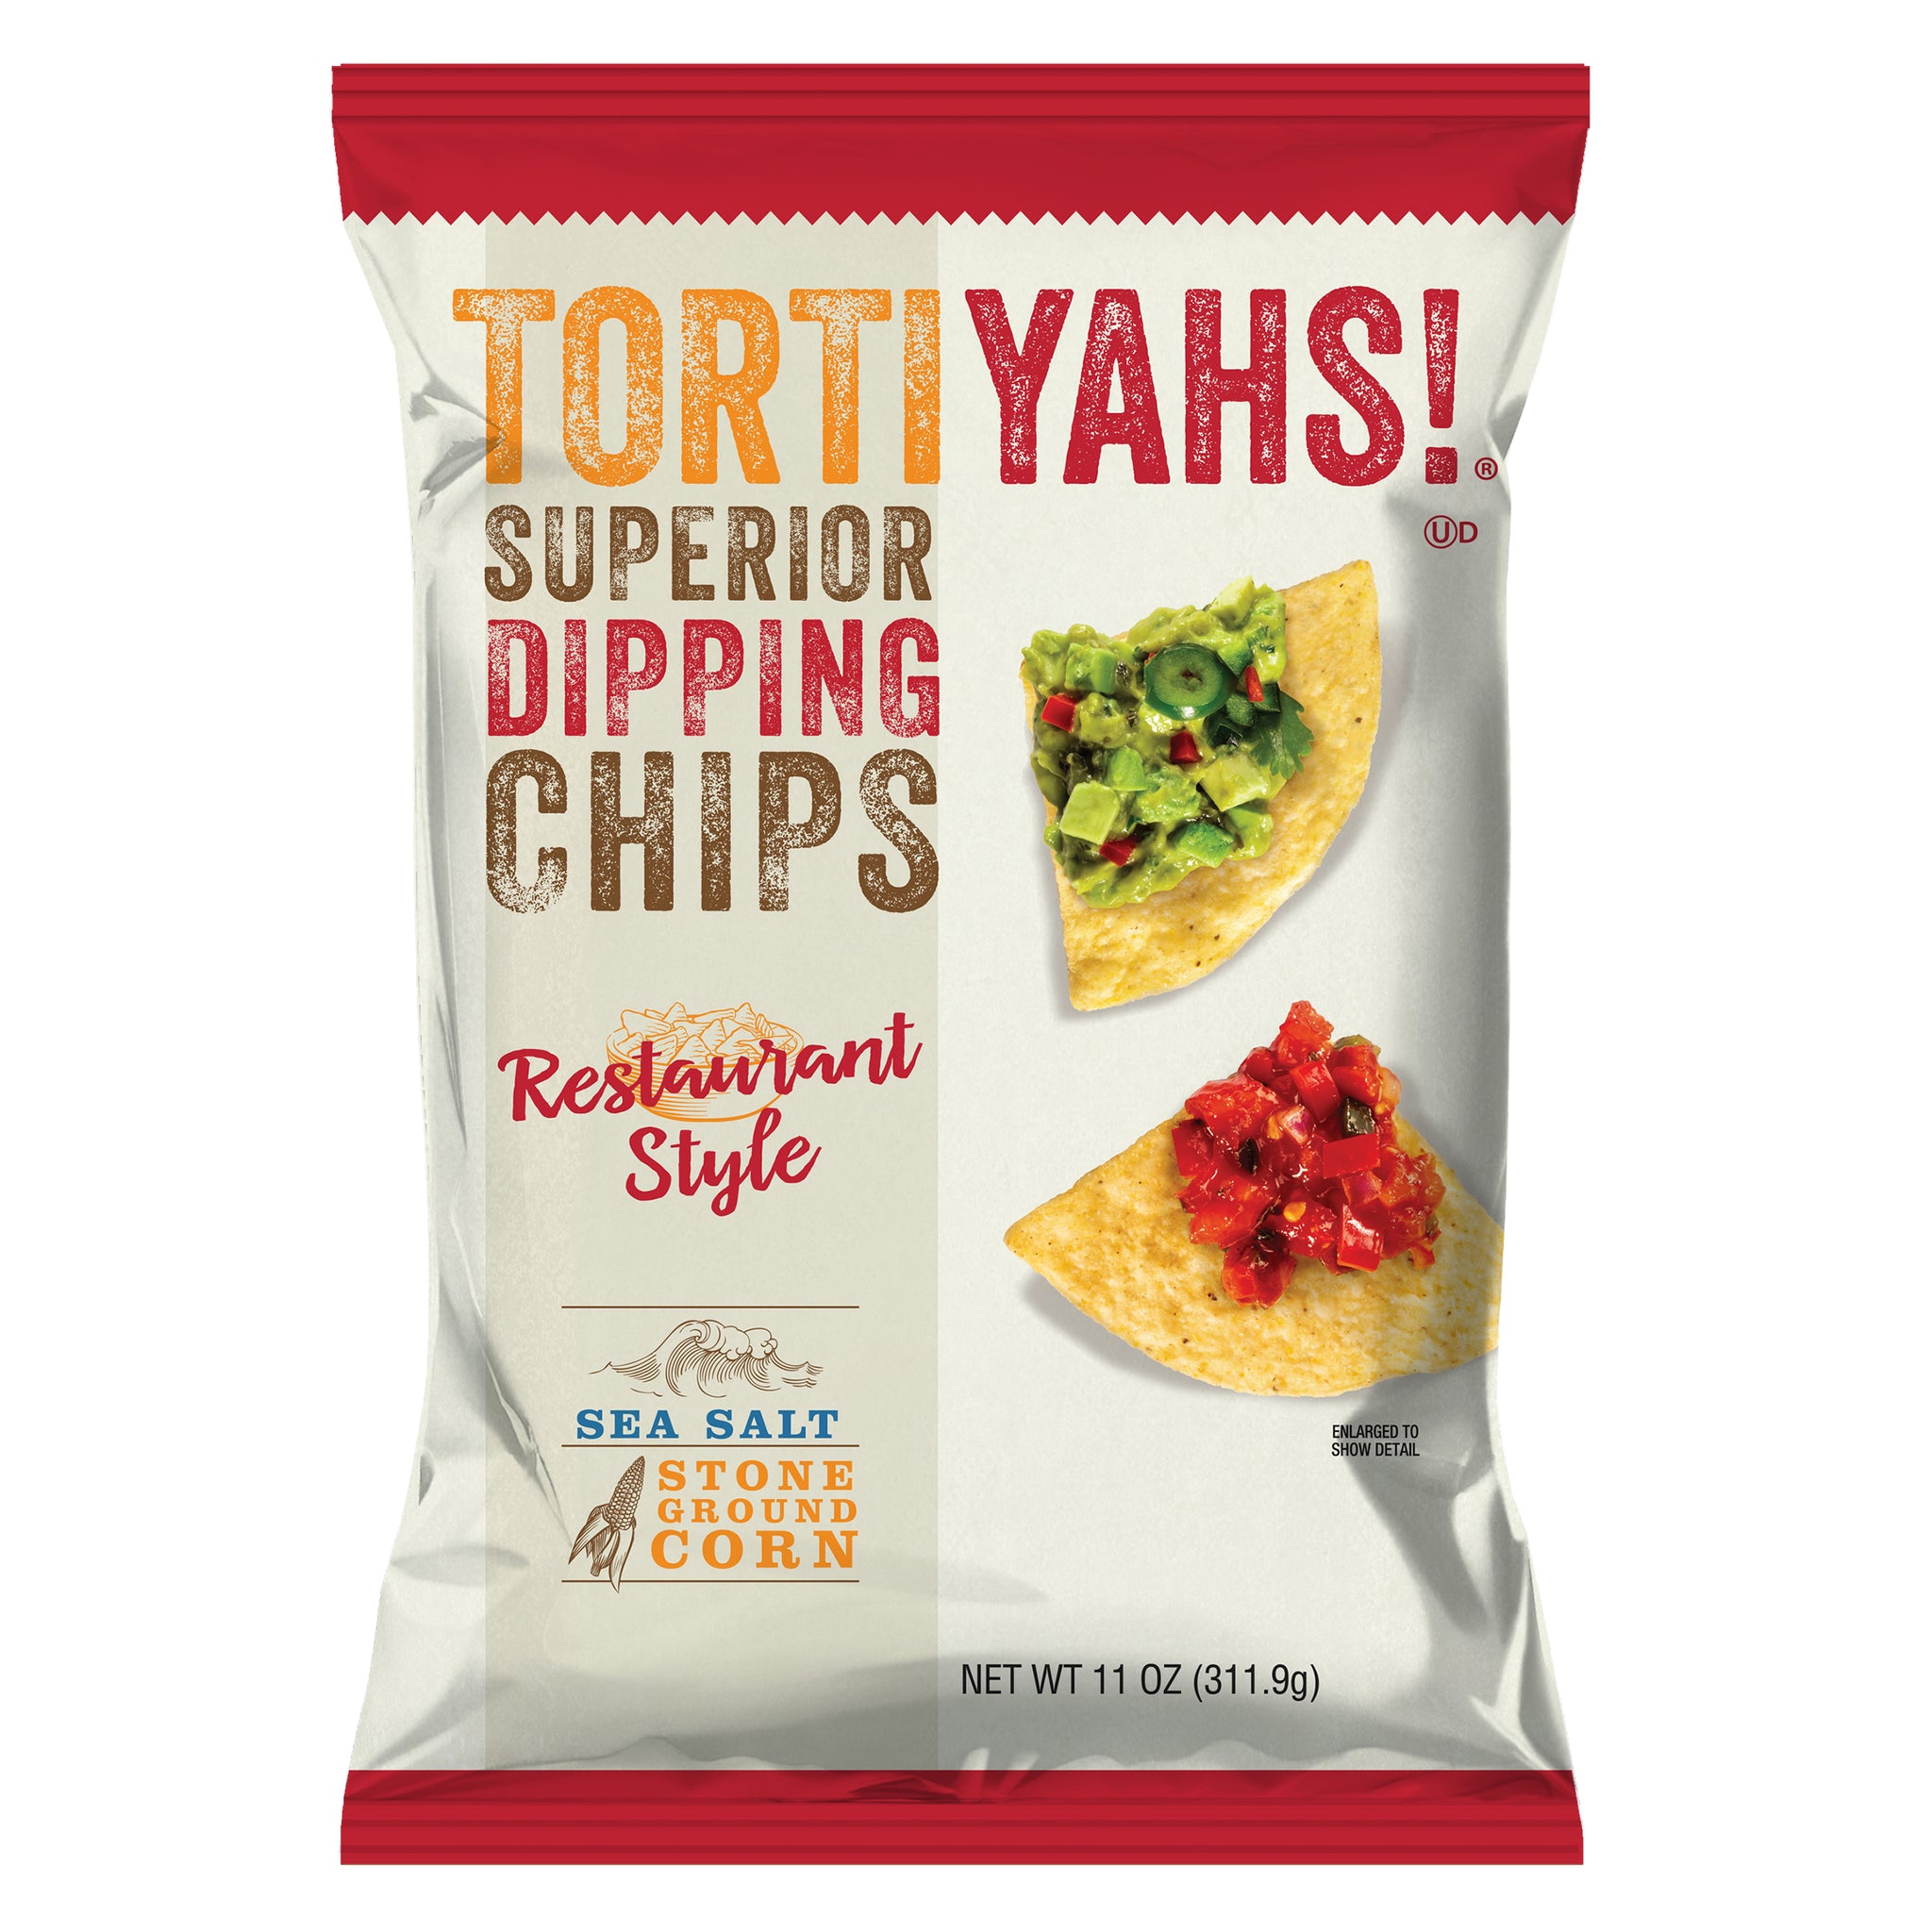 TORTIYAHS!® Superior Dipping Chips Restaurant Style Sea Salt